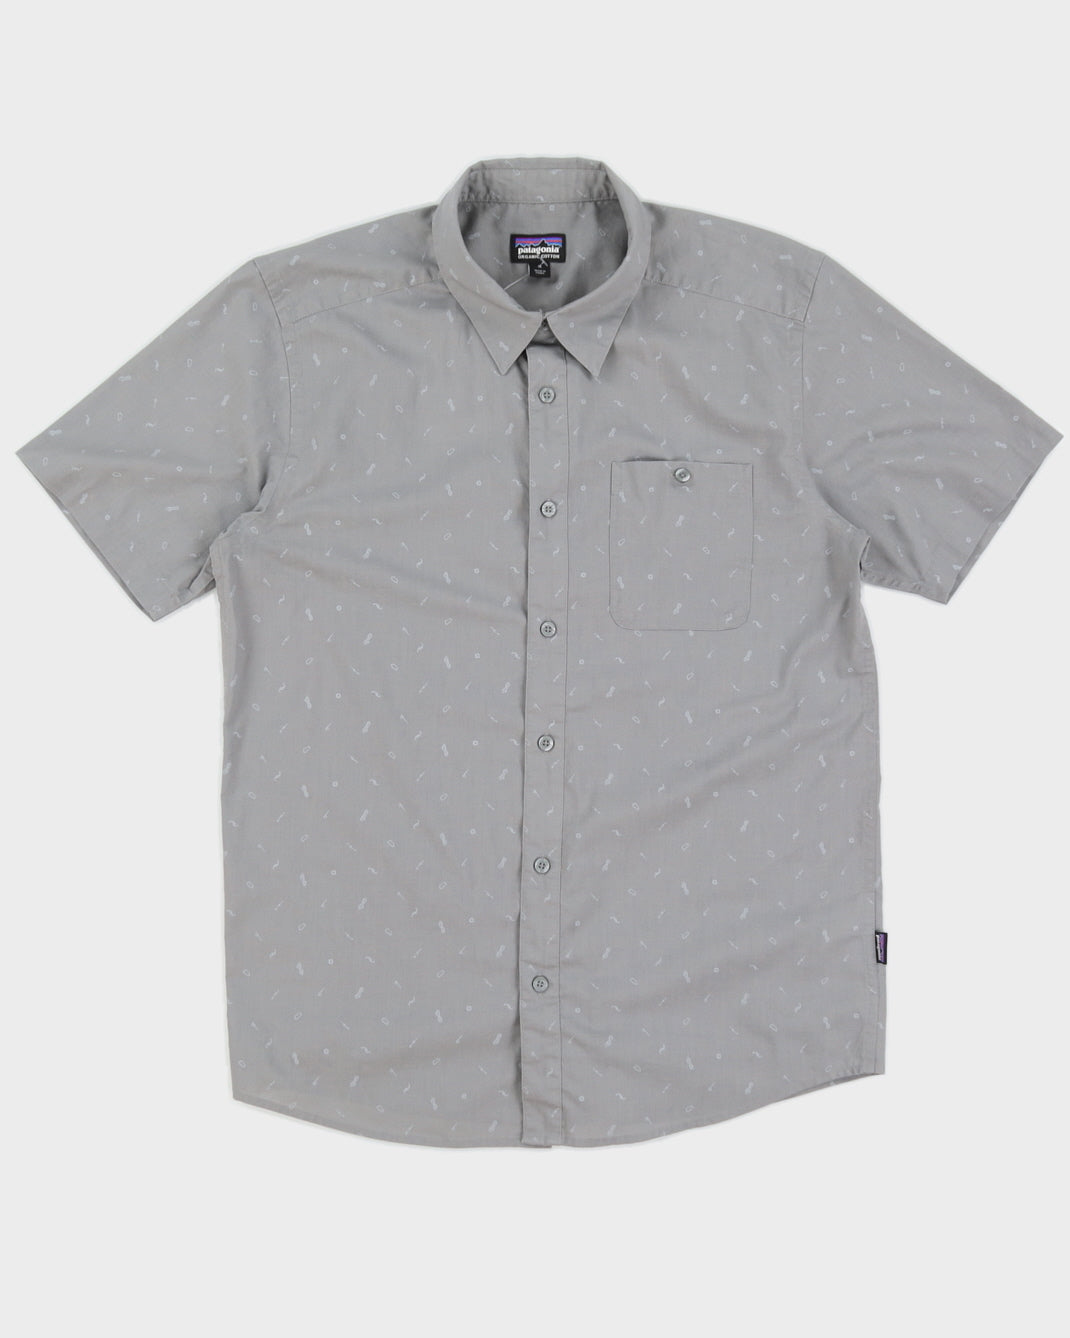 Patagonia Grey Printed Pocket Shirt - M